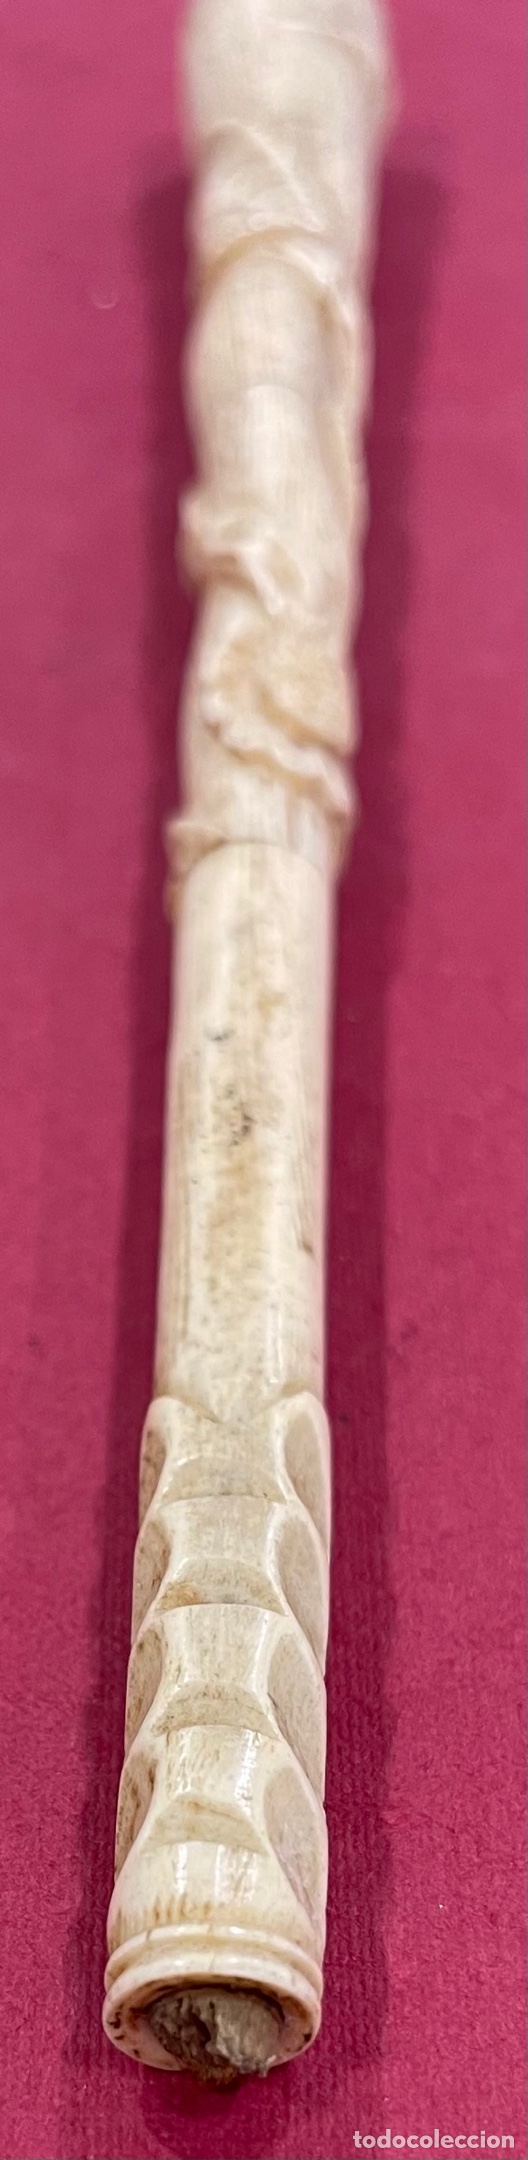 Antigüedades: Antiguo mango para bastón de paseo, en hueso tallado. - Foto 2 - 271583598